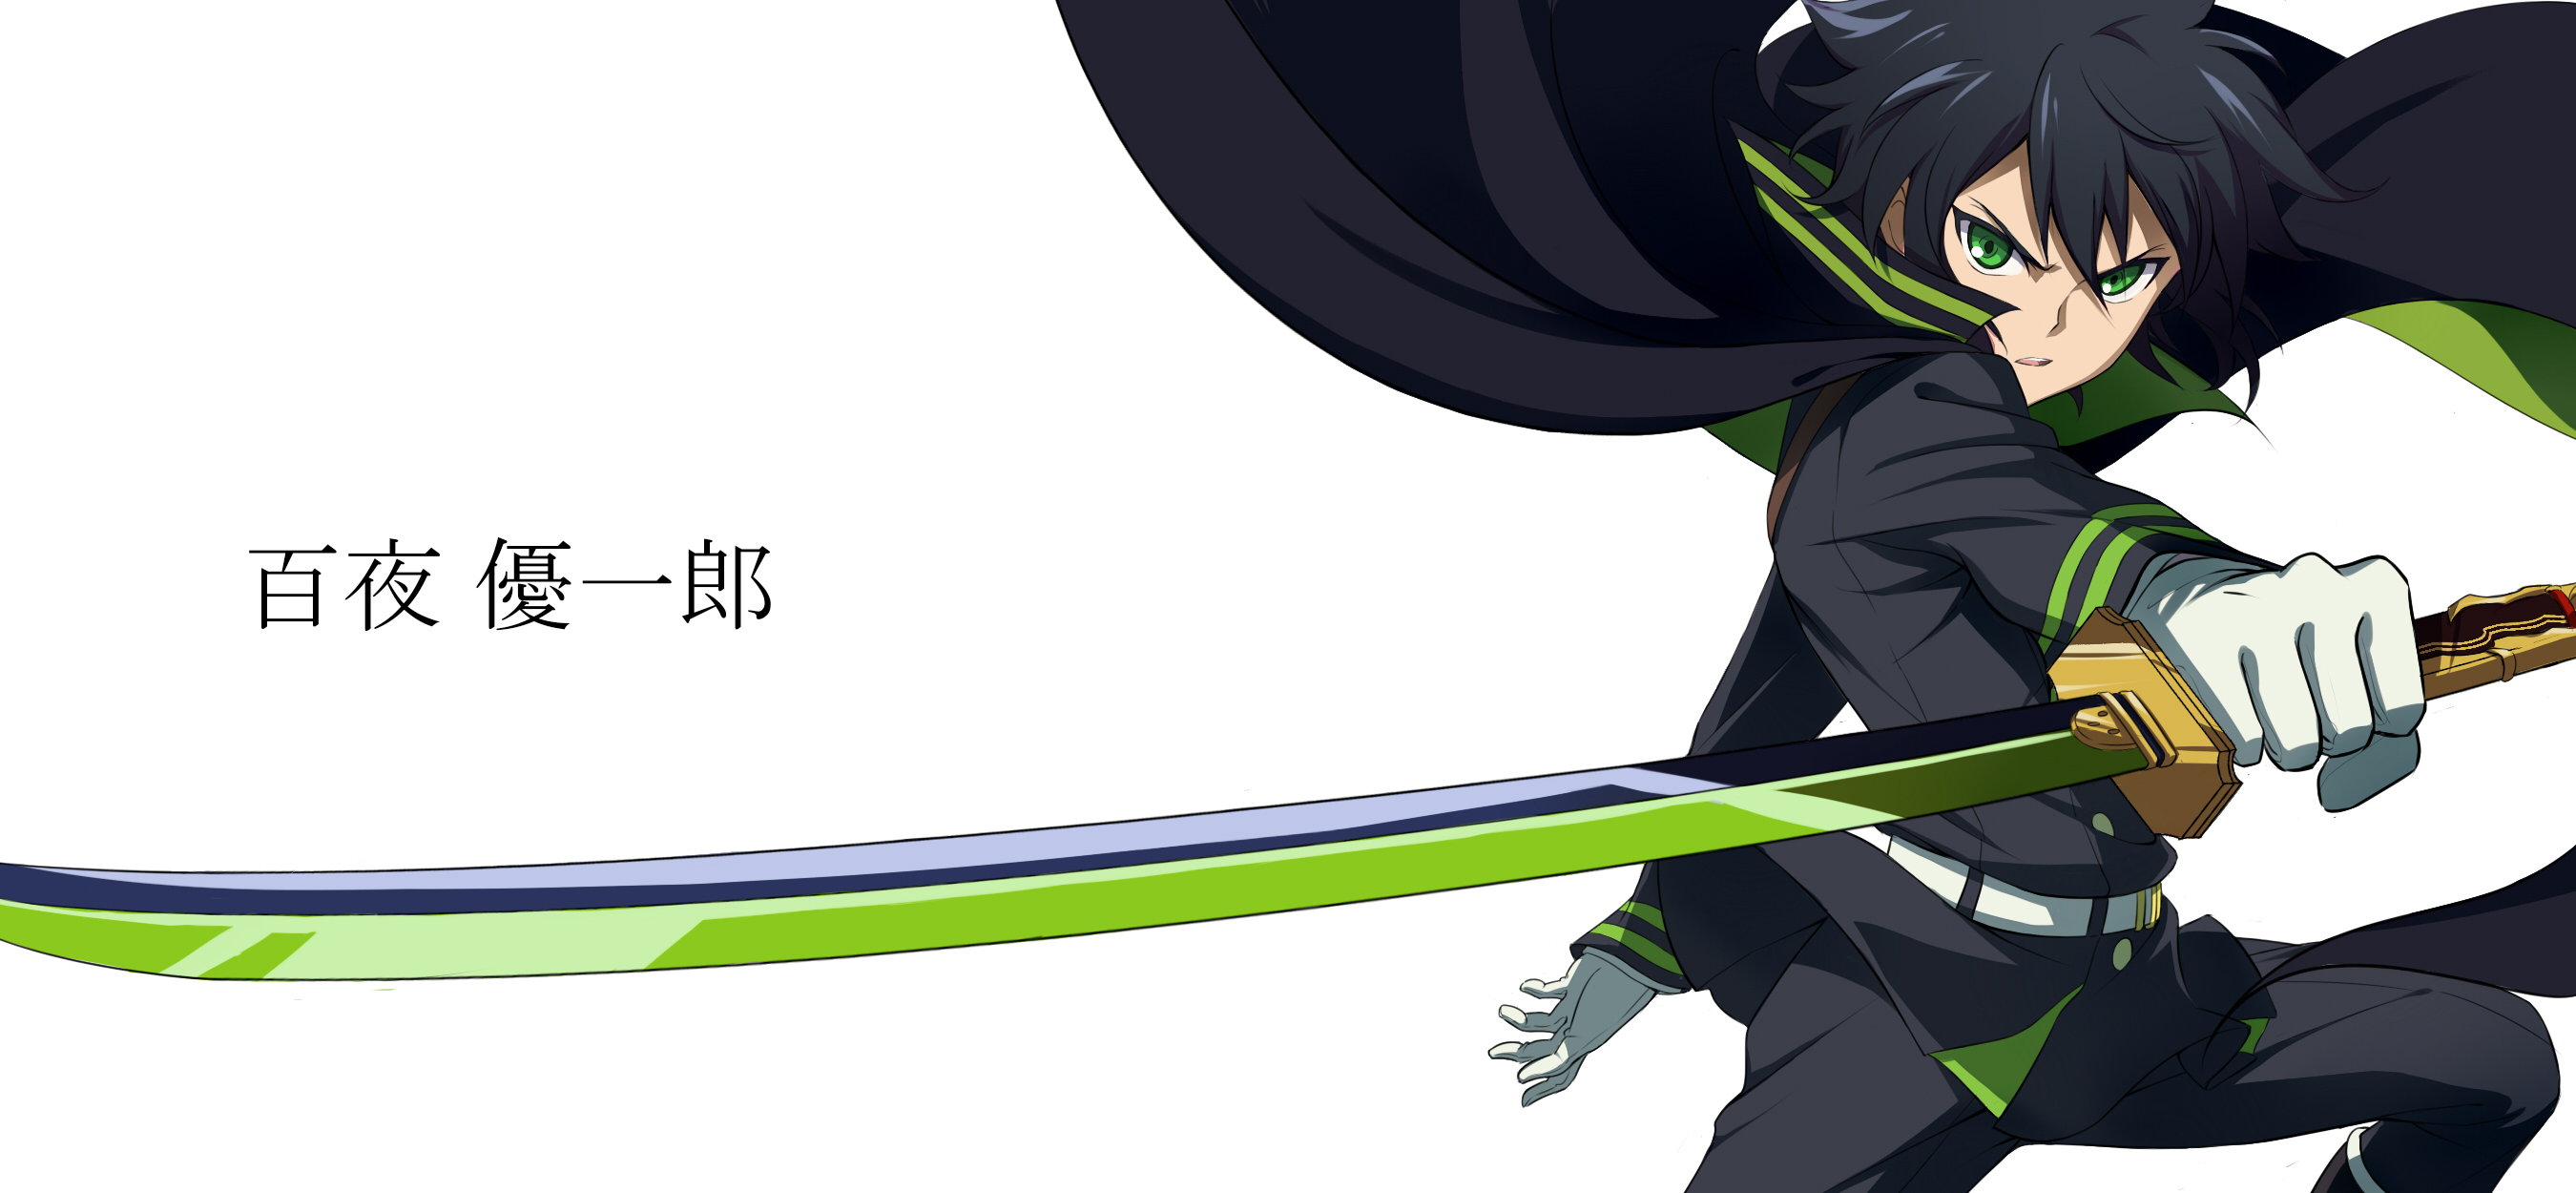 Angry Anime Belt Black Hair Boy Cape Glove Green Eyes Katana Seraph Of The End Sword Uniform Weapon  2700x1250